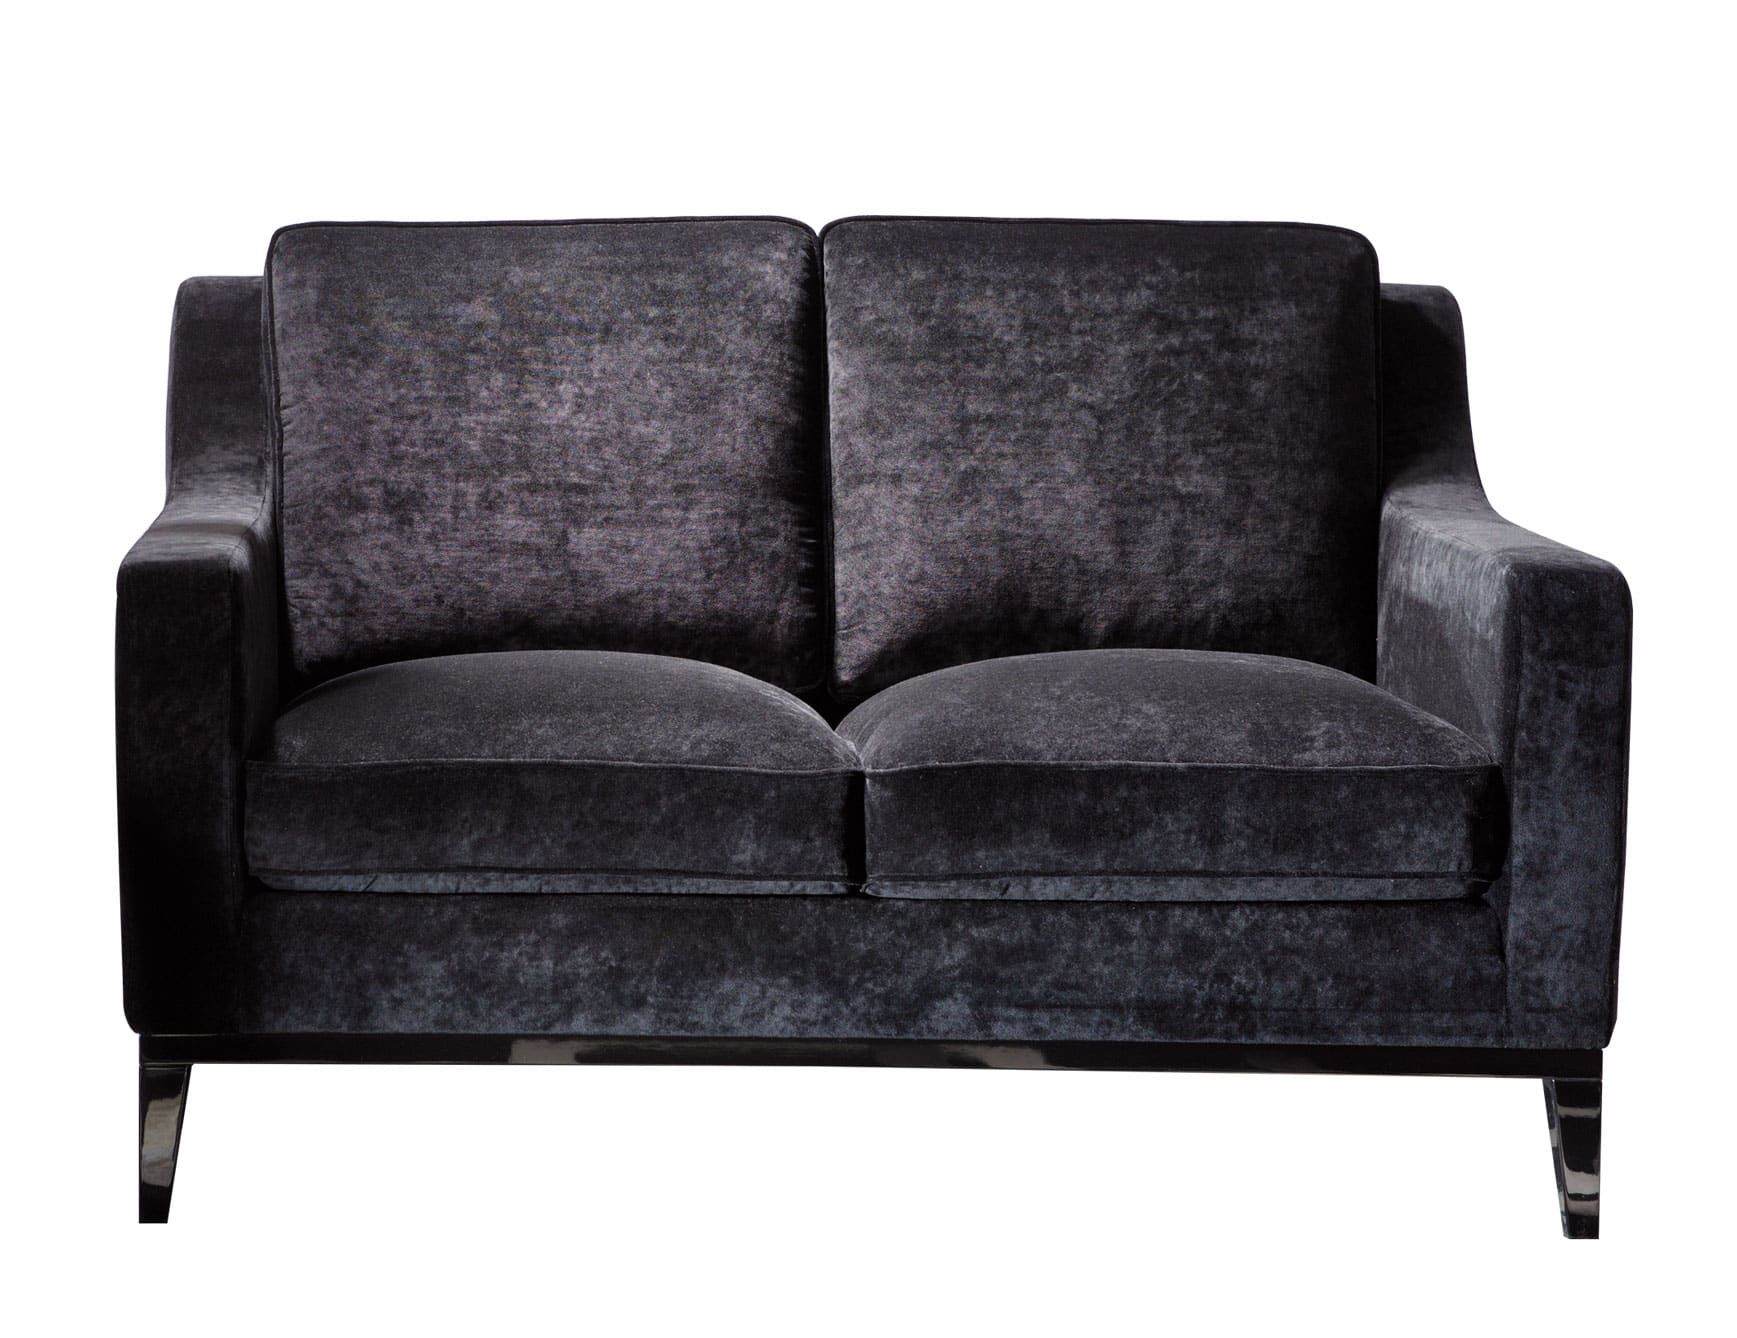 Cristine modern Italian sofa chair with black fabric